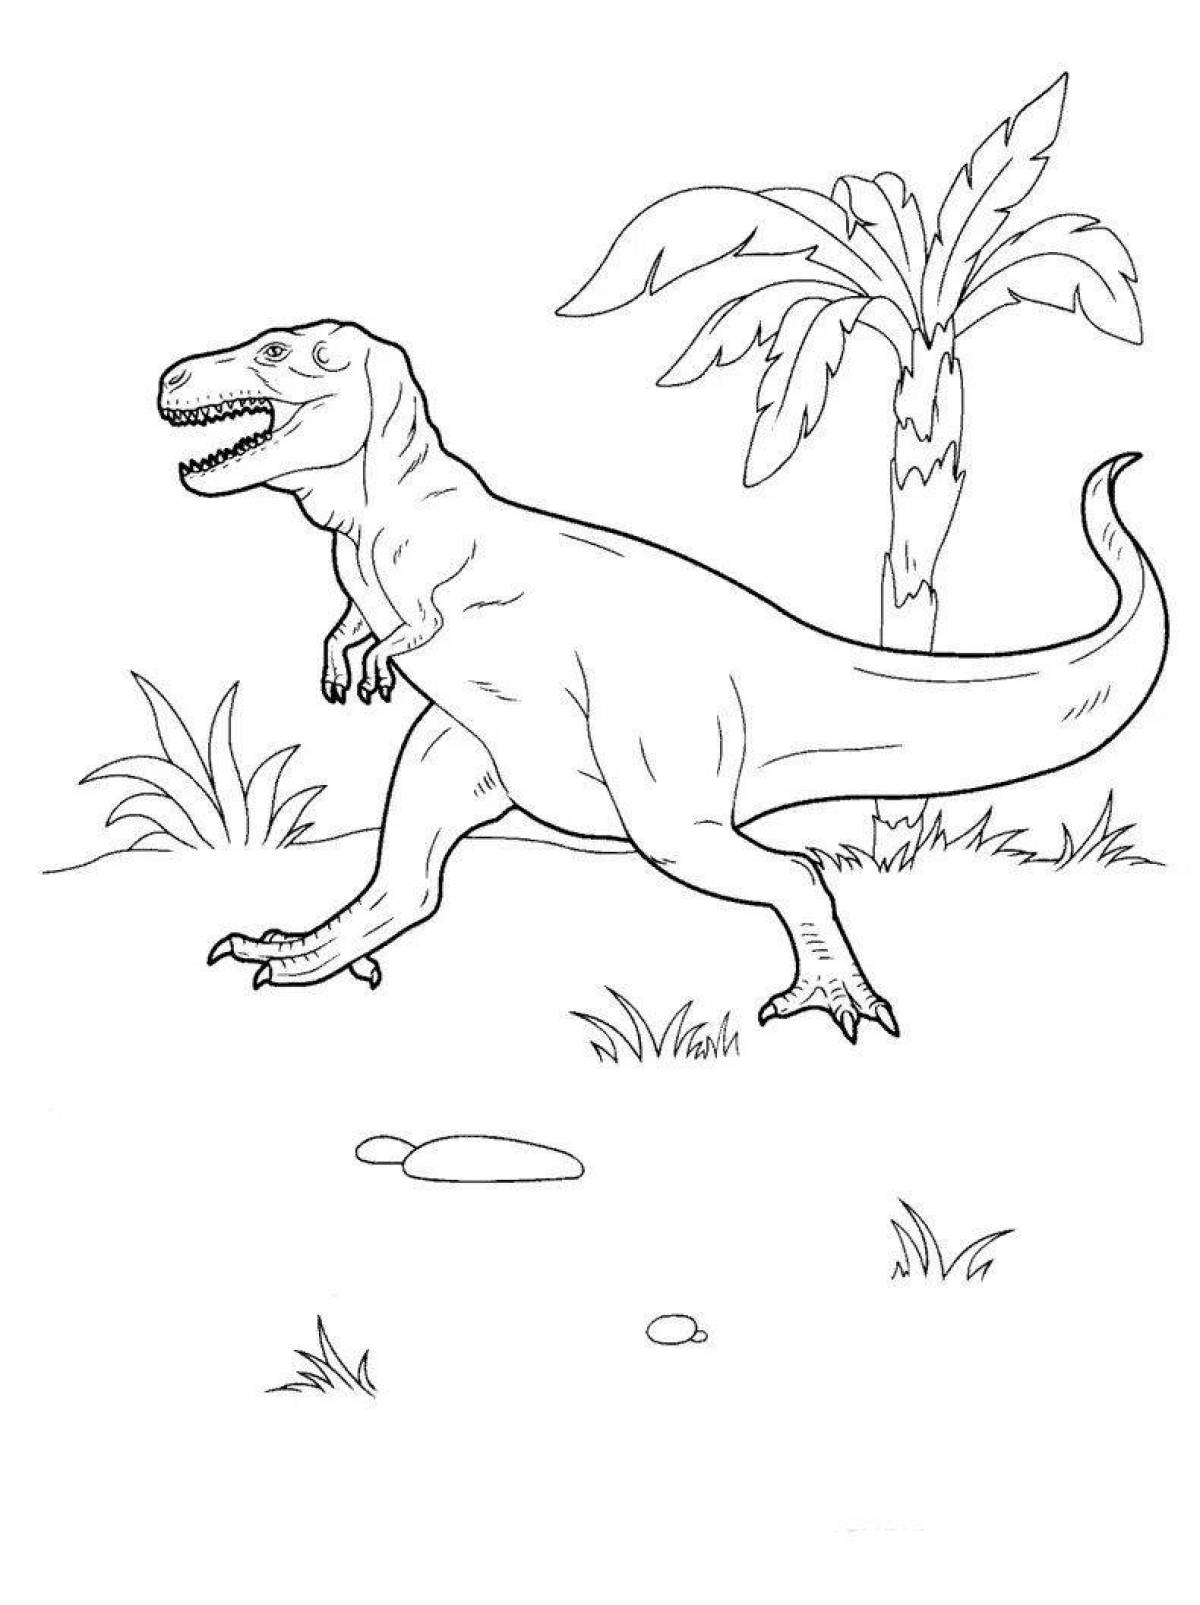 Joyful tyrannosaurus coloring book for kids